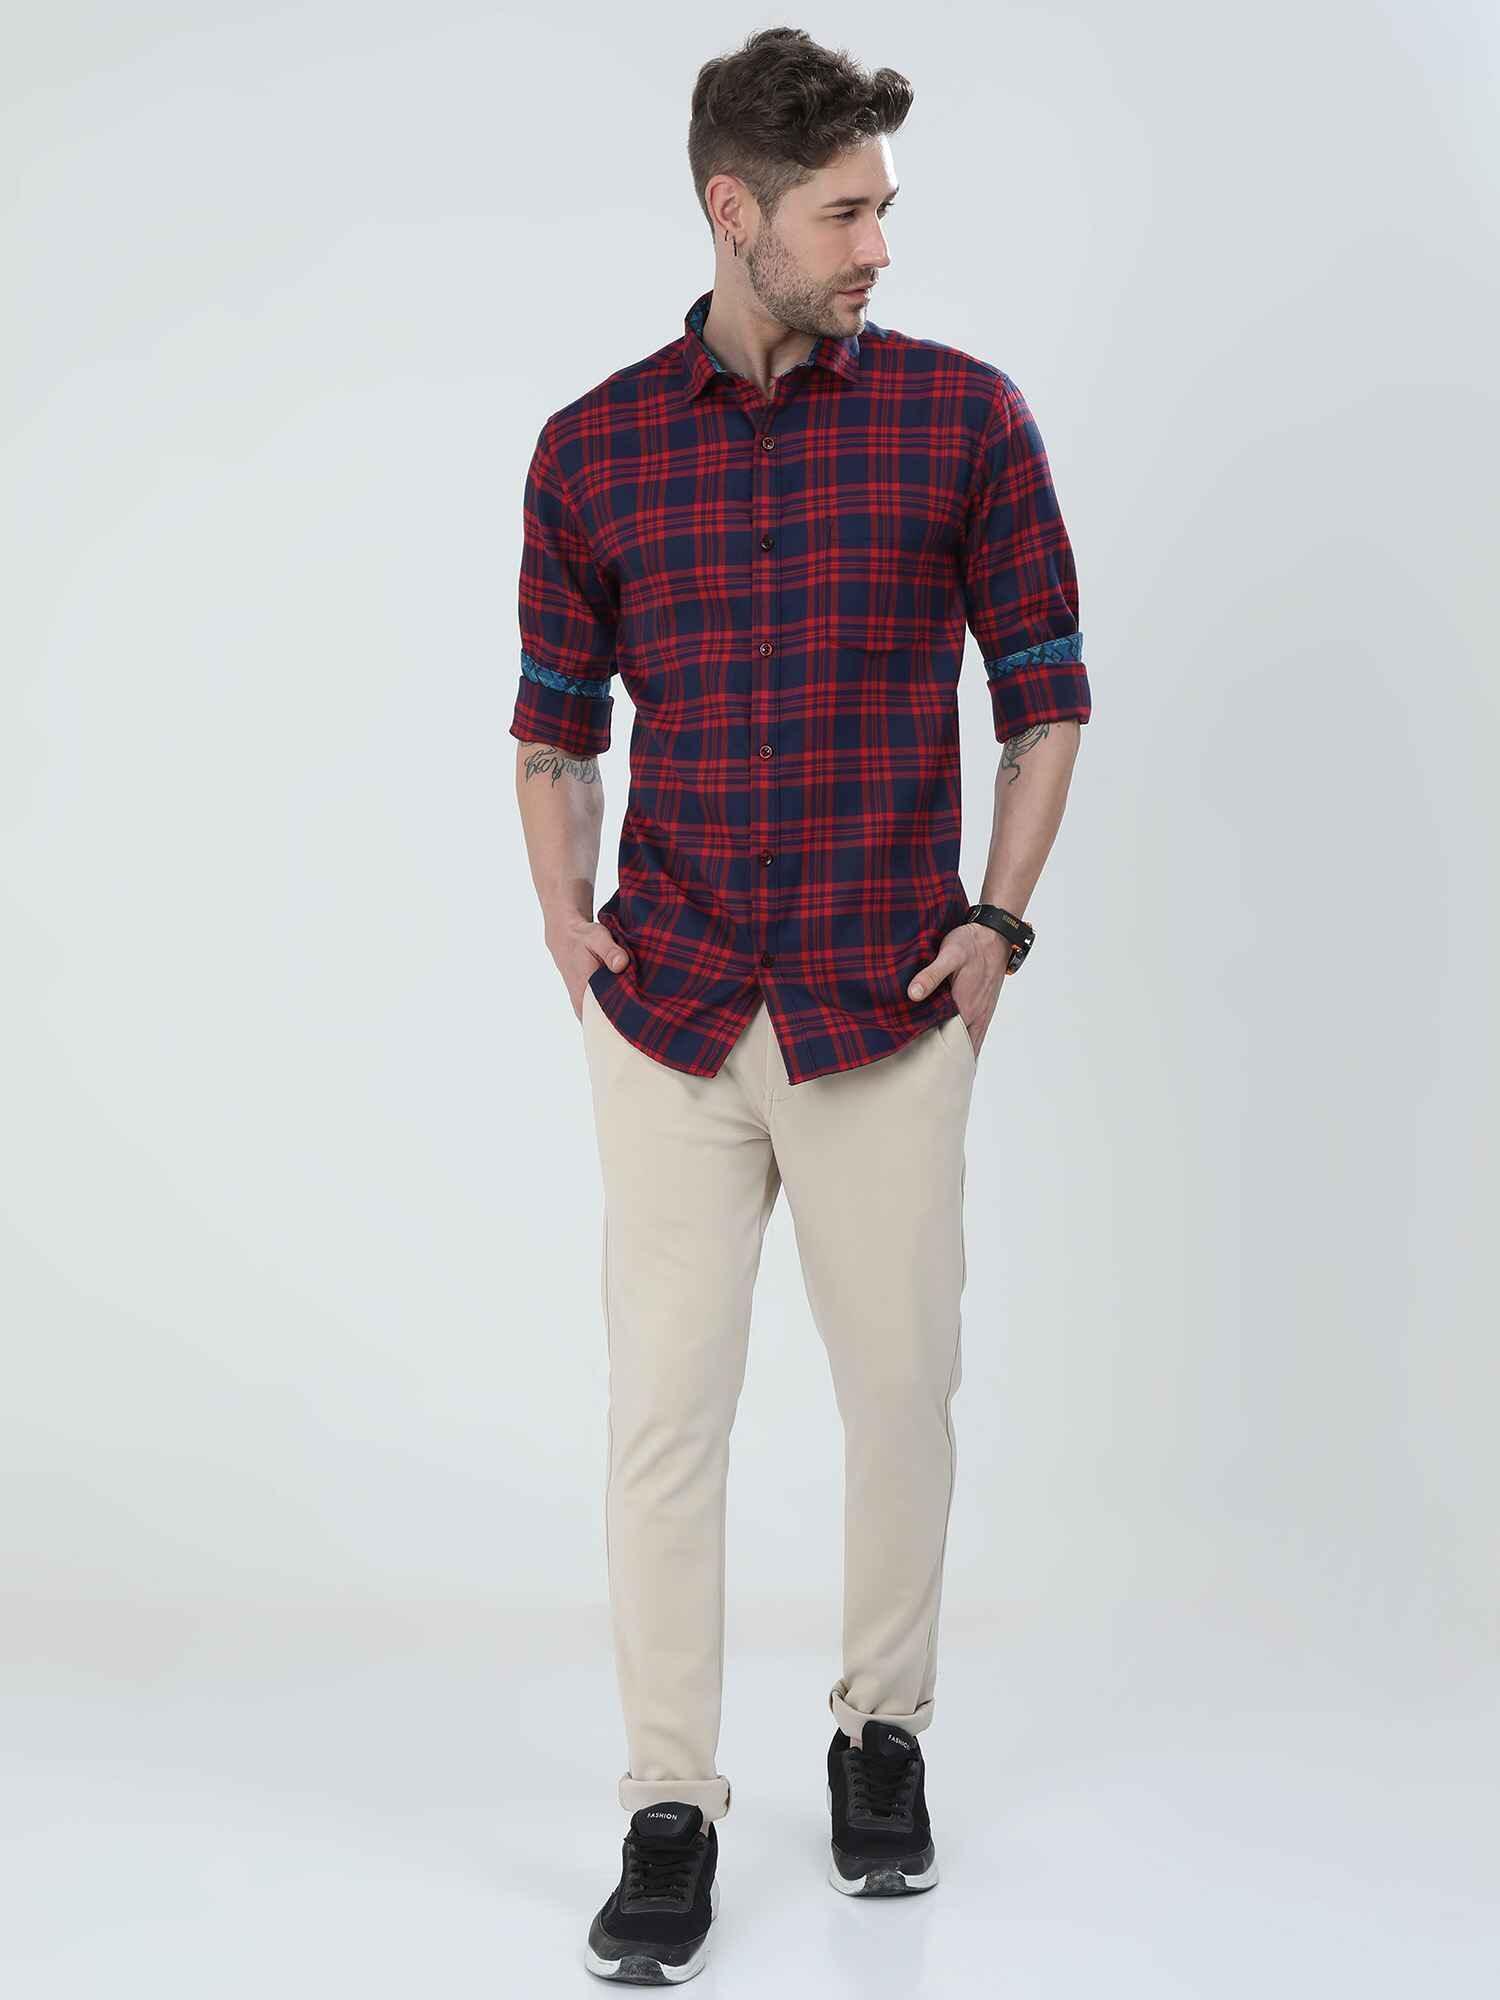 Blue and Red Checkered Cotton Shirt - Guniaa Fashions